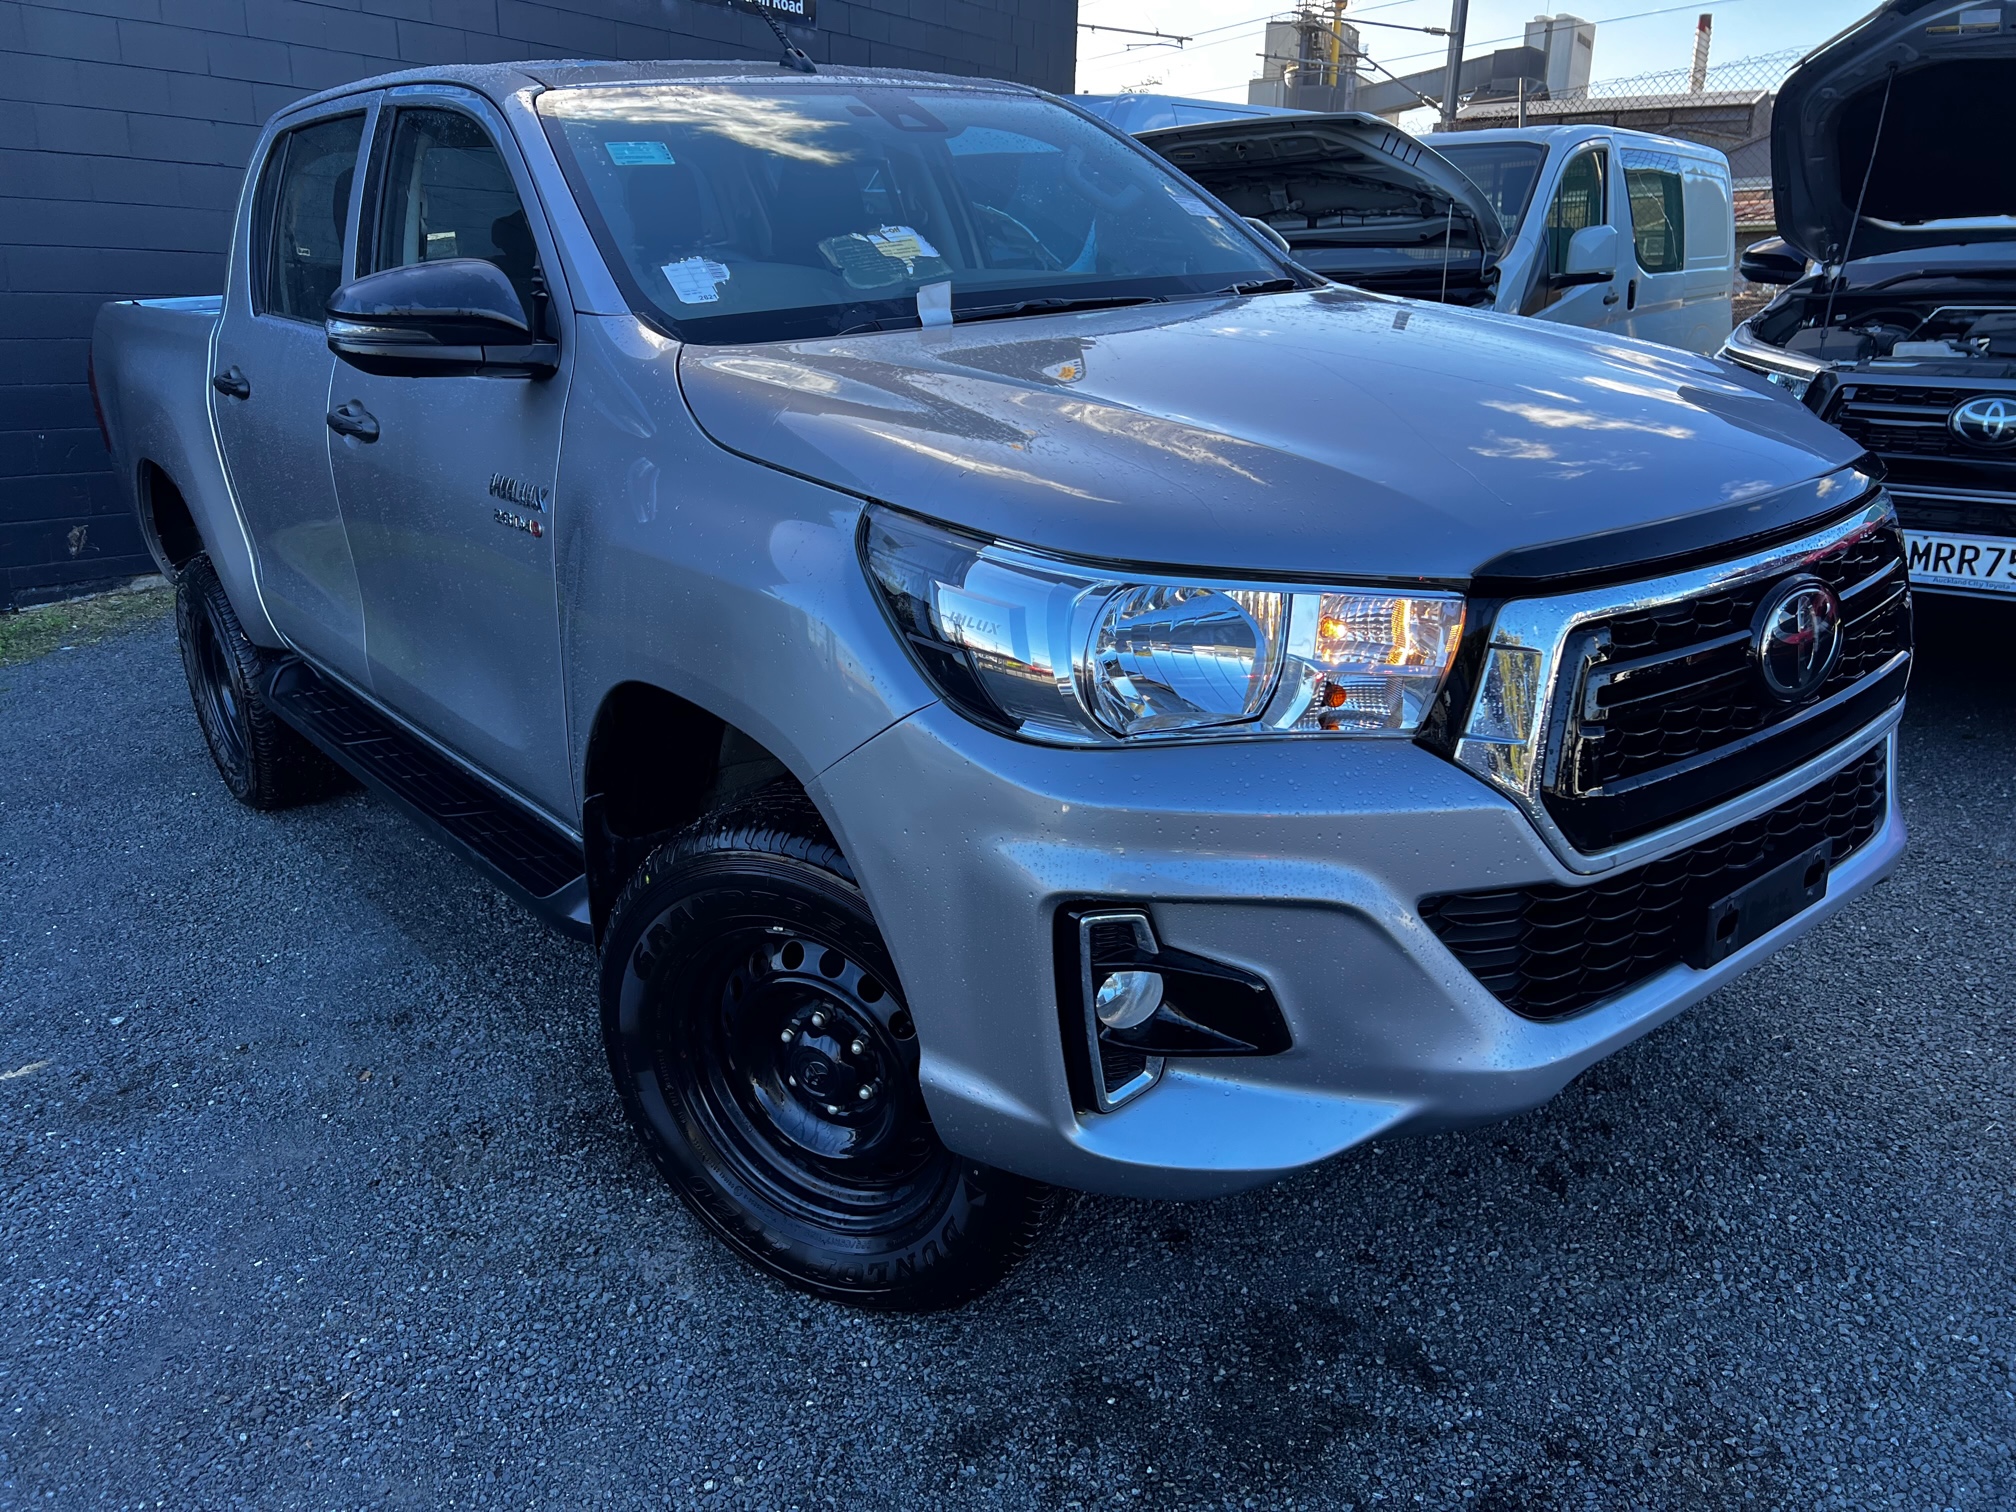 Toyota Hilux SR5 2019 Image 2